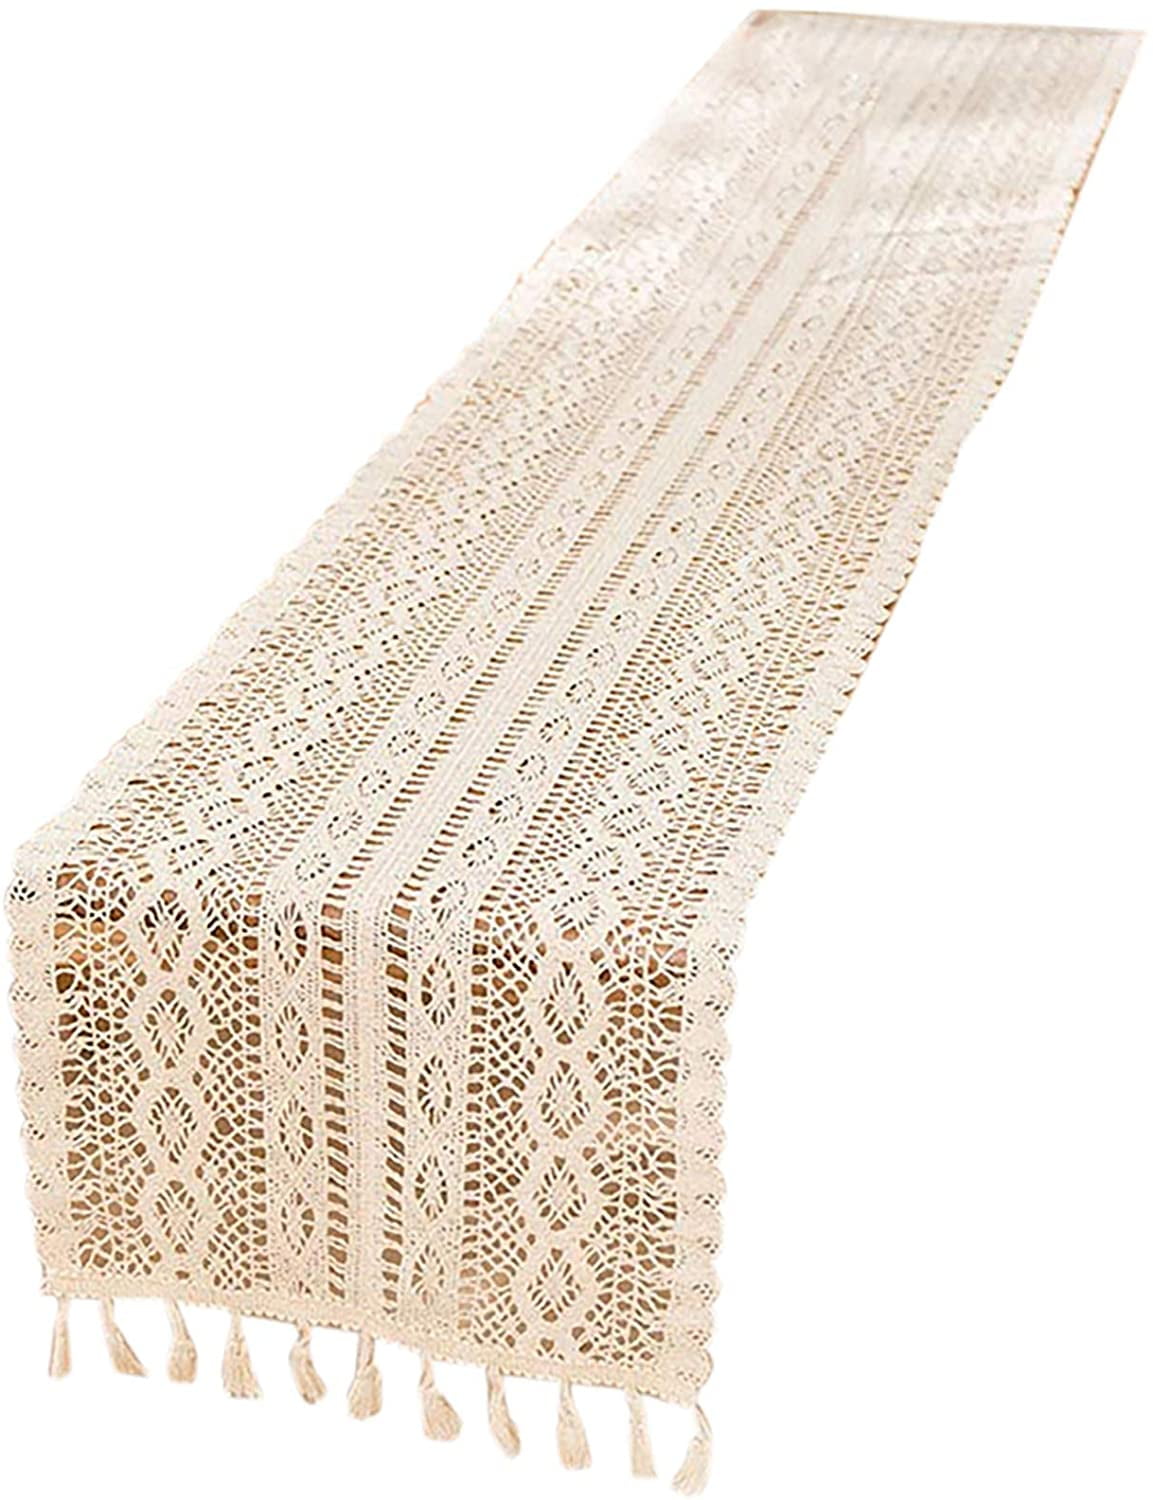 Macrame Table Runner Cotton Crochet Lace Doily Boho Wedding Home Decor 30x160cm 